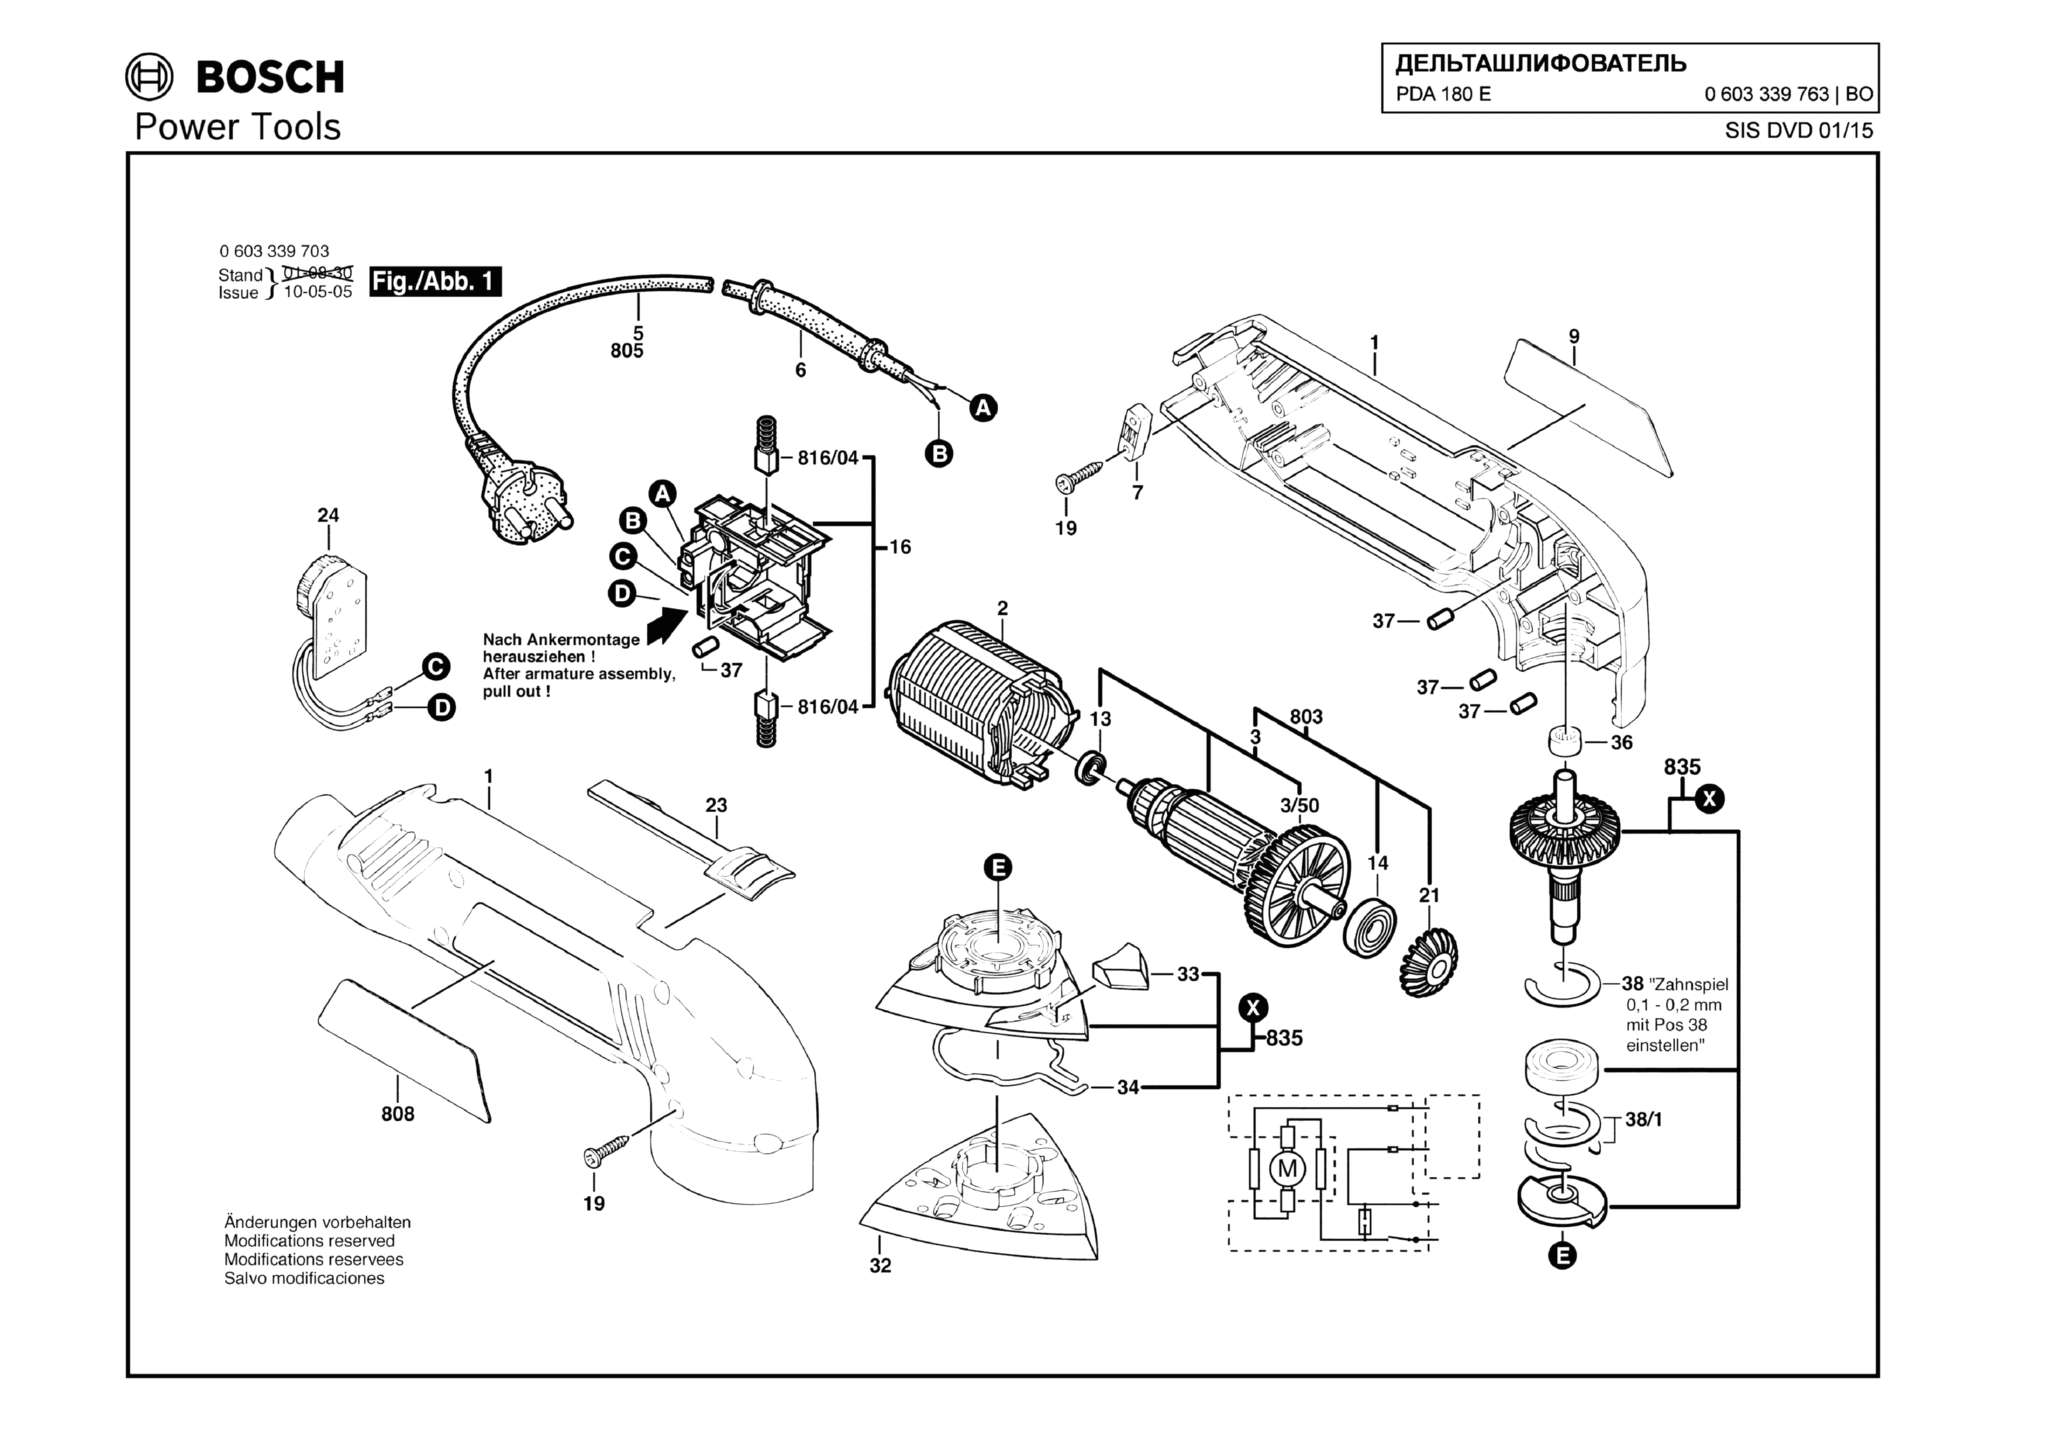 Запчасти, схема и деталировка Bosch PDA 180 E (ТИП 0603339763)